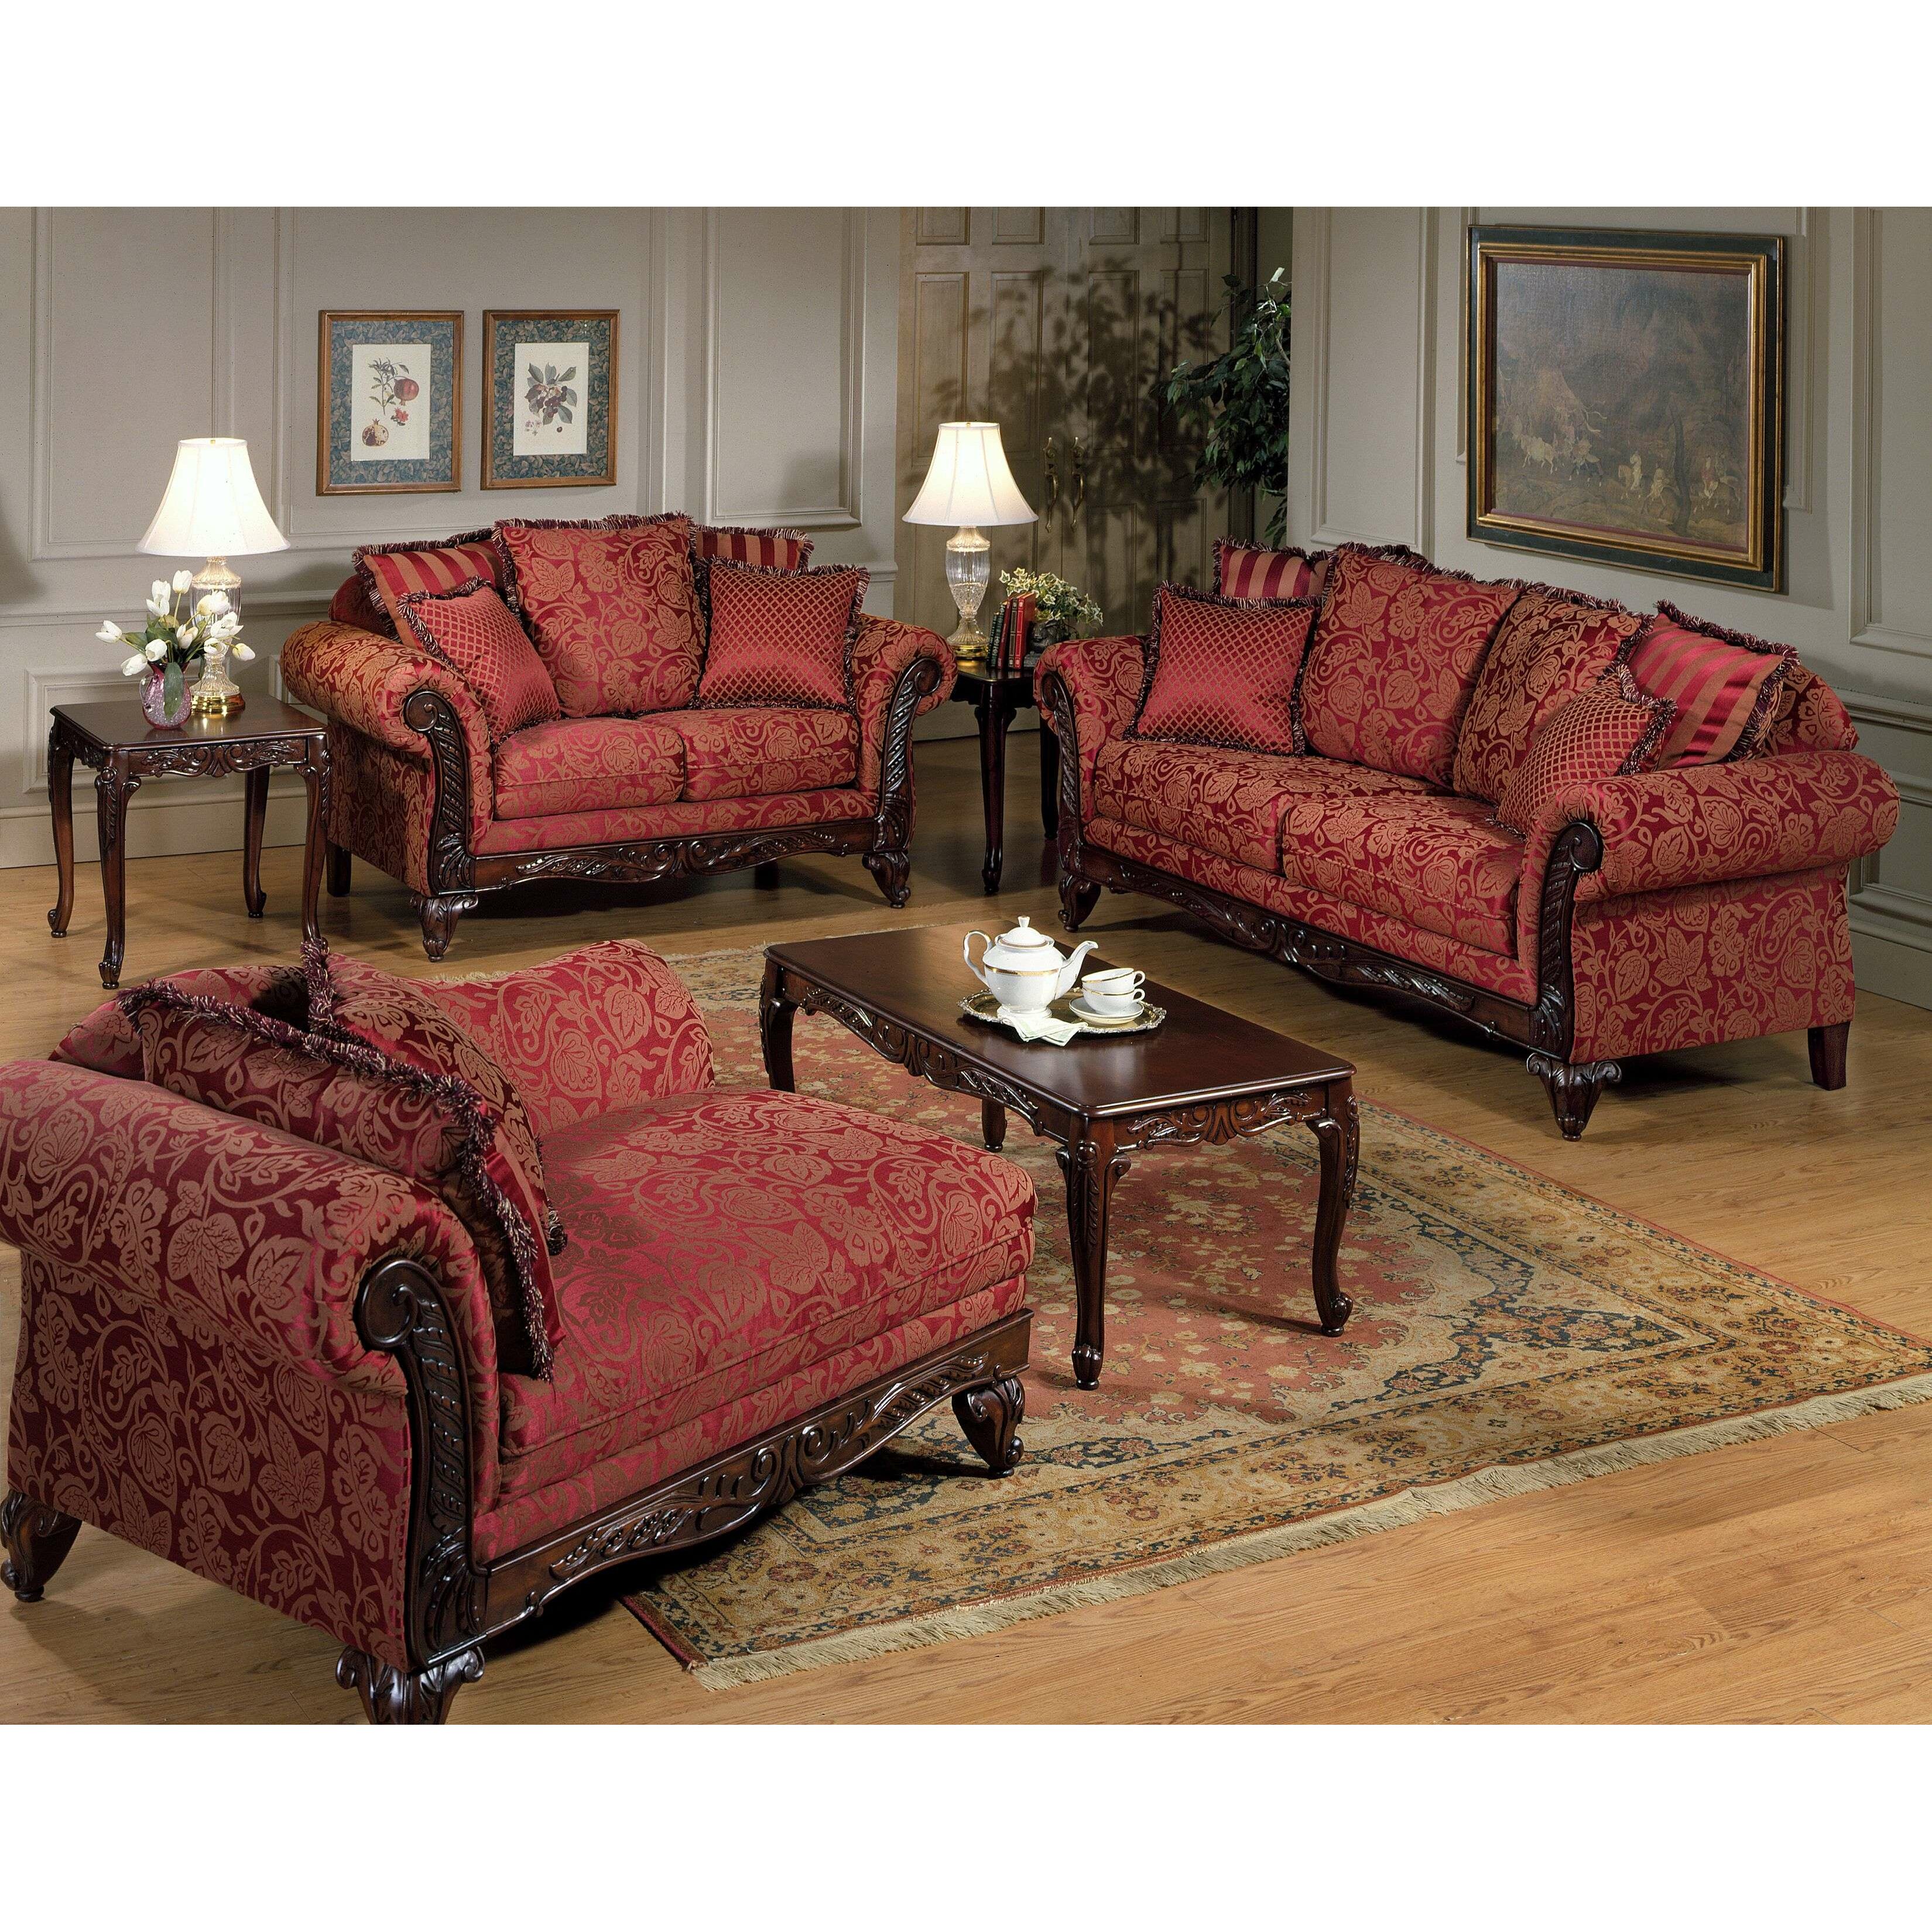 Astoria Grand Serta Upholstery Belmond Living Room